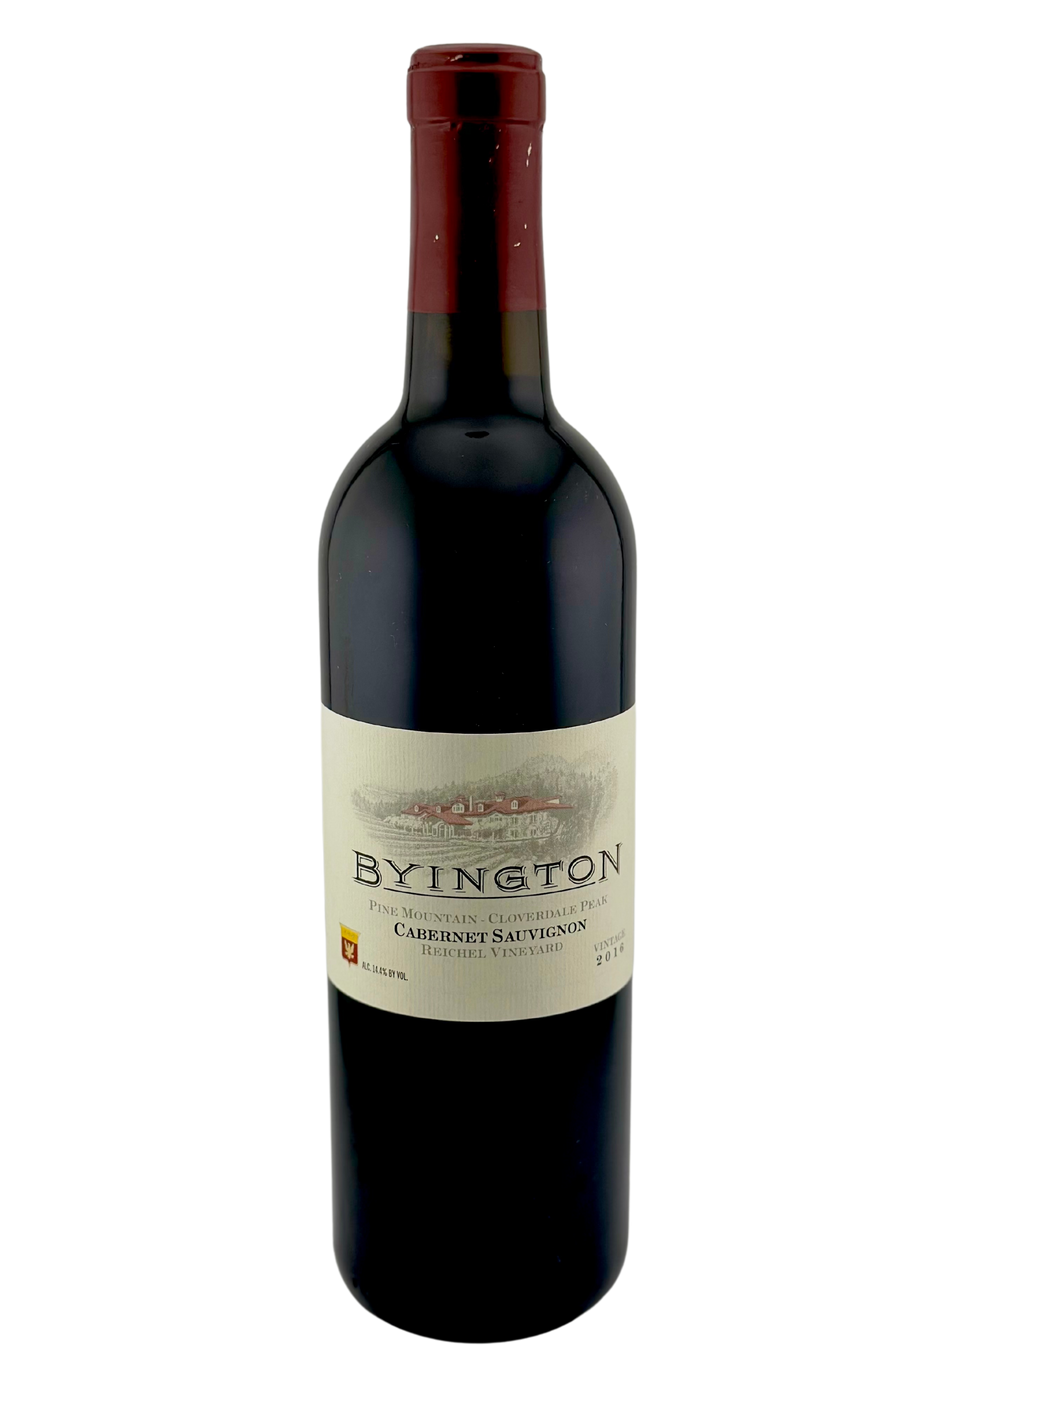 2016 Byington Cabernet Sauvignon Reichel Vineyard